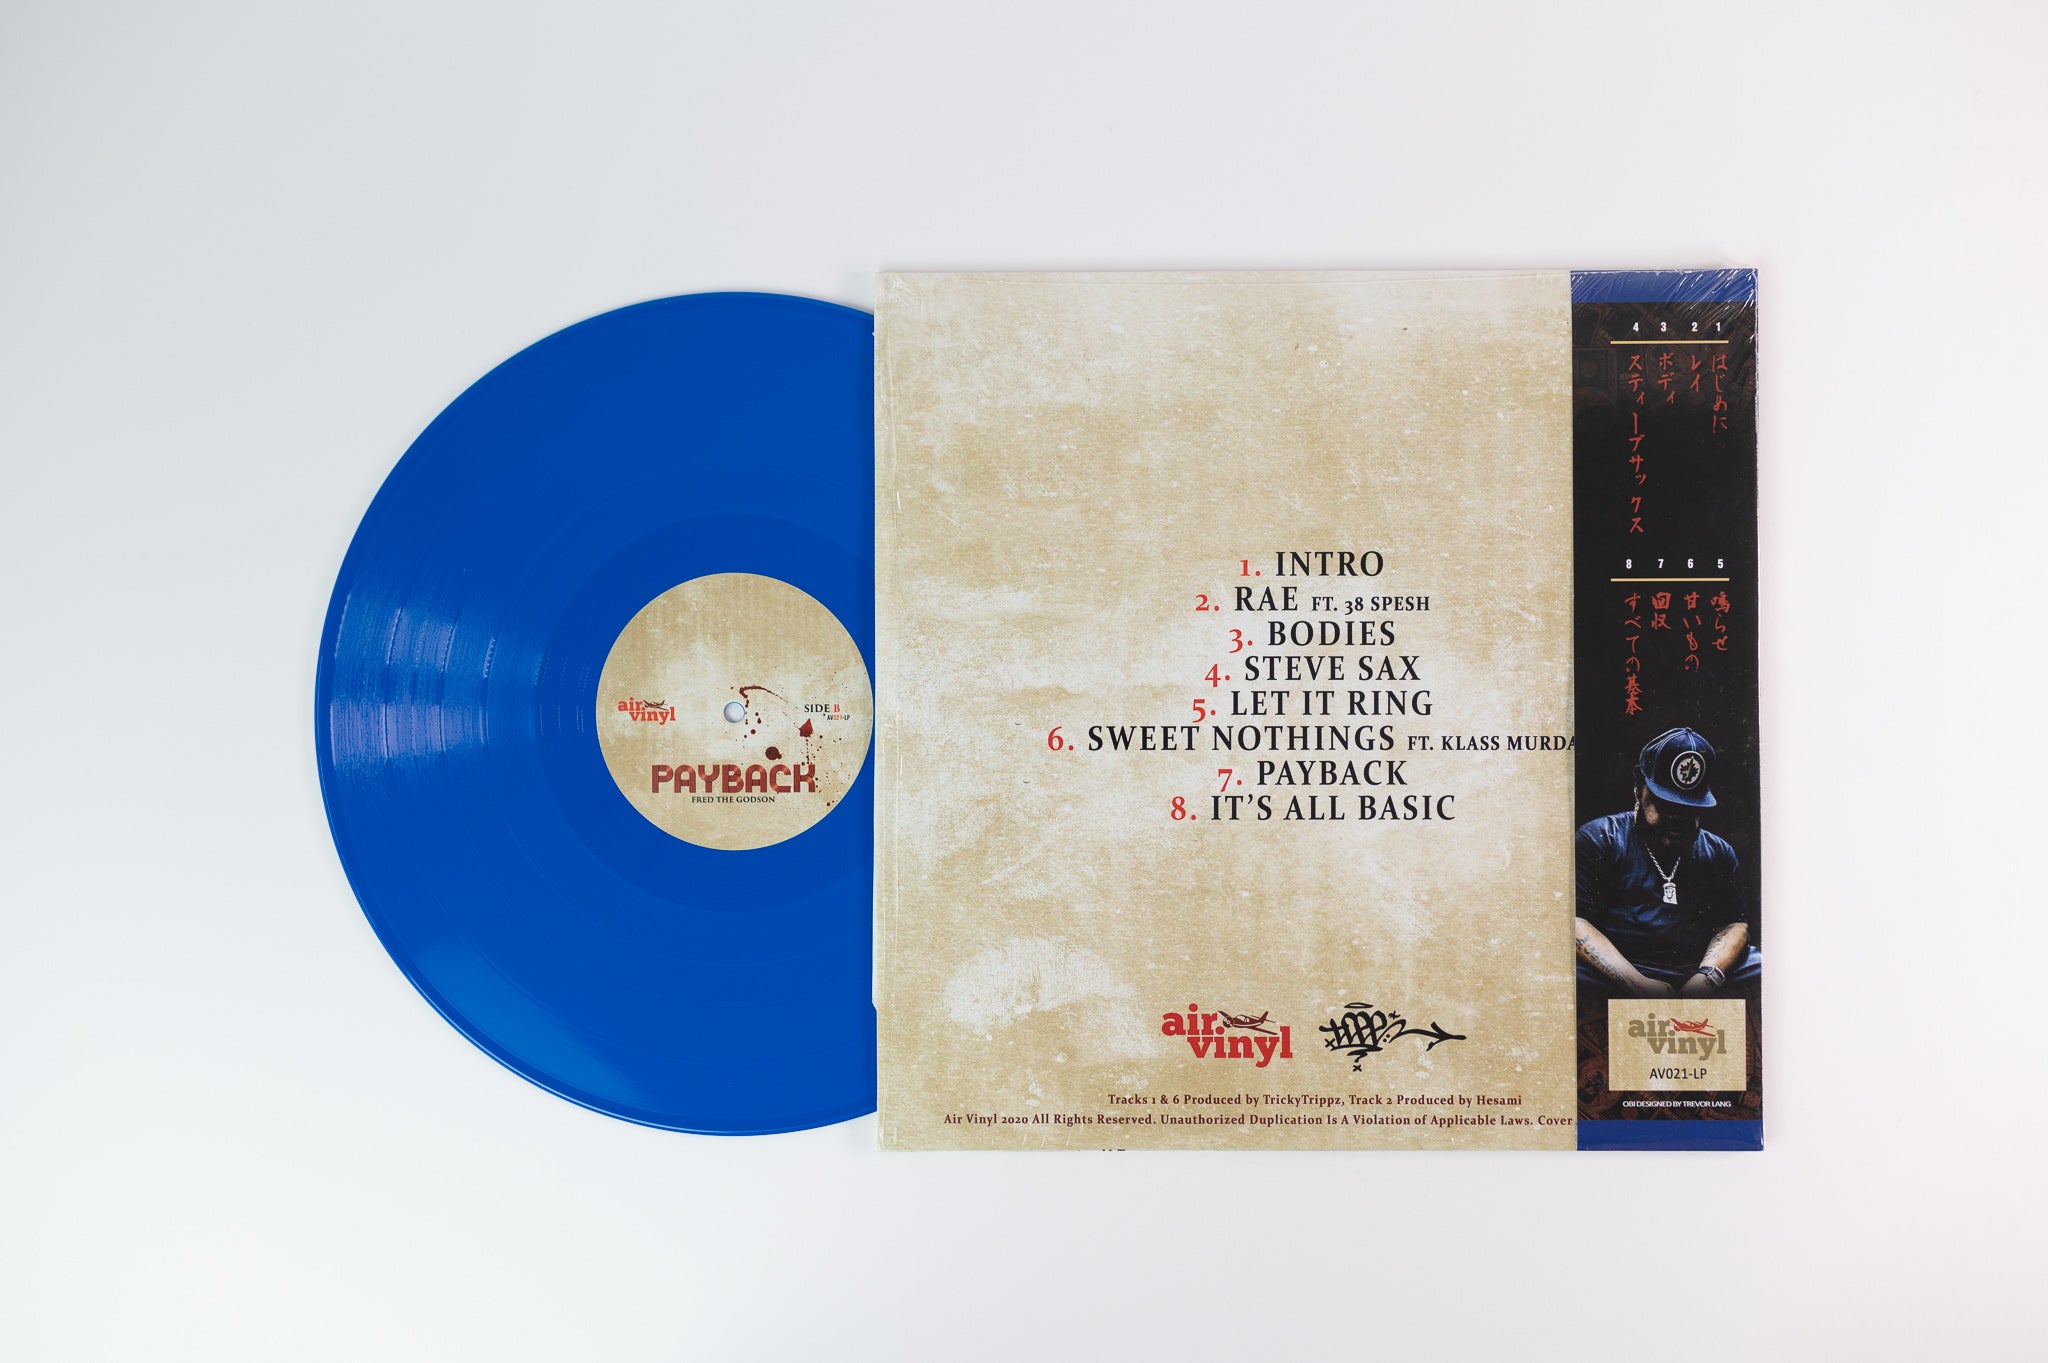 Fred The Godson - Payback on Air Vinyl Limited Blue Vinyl